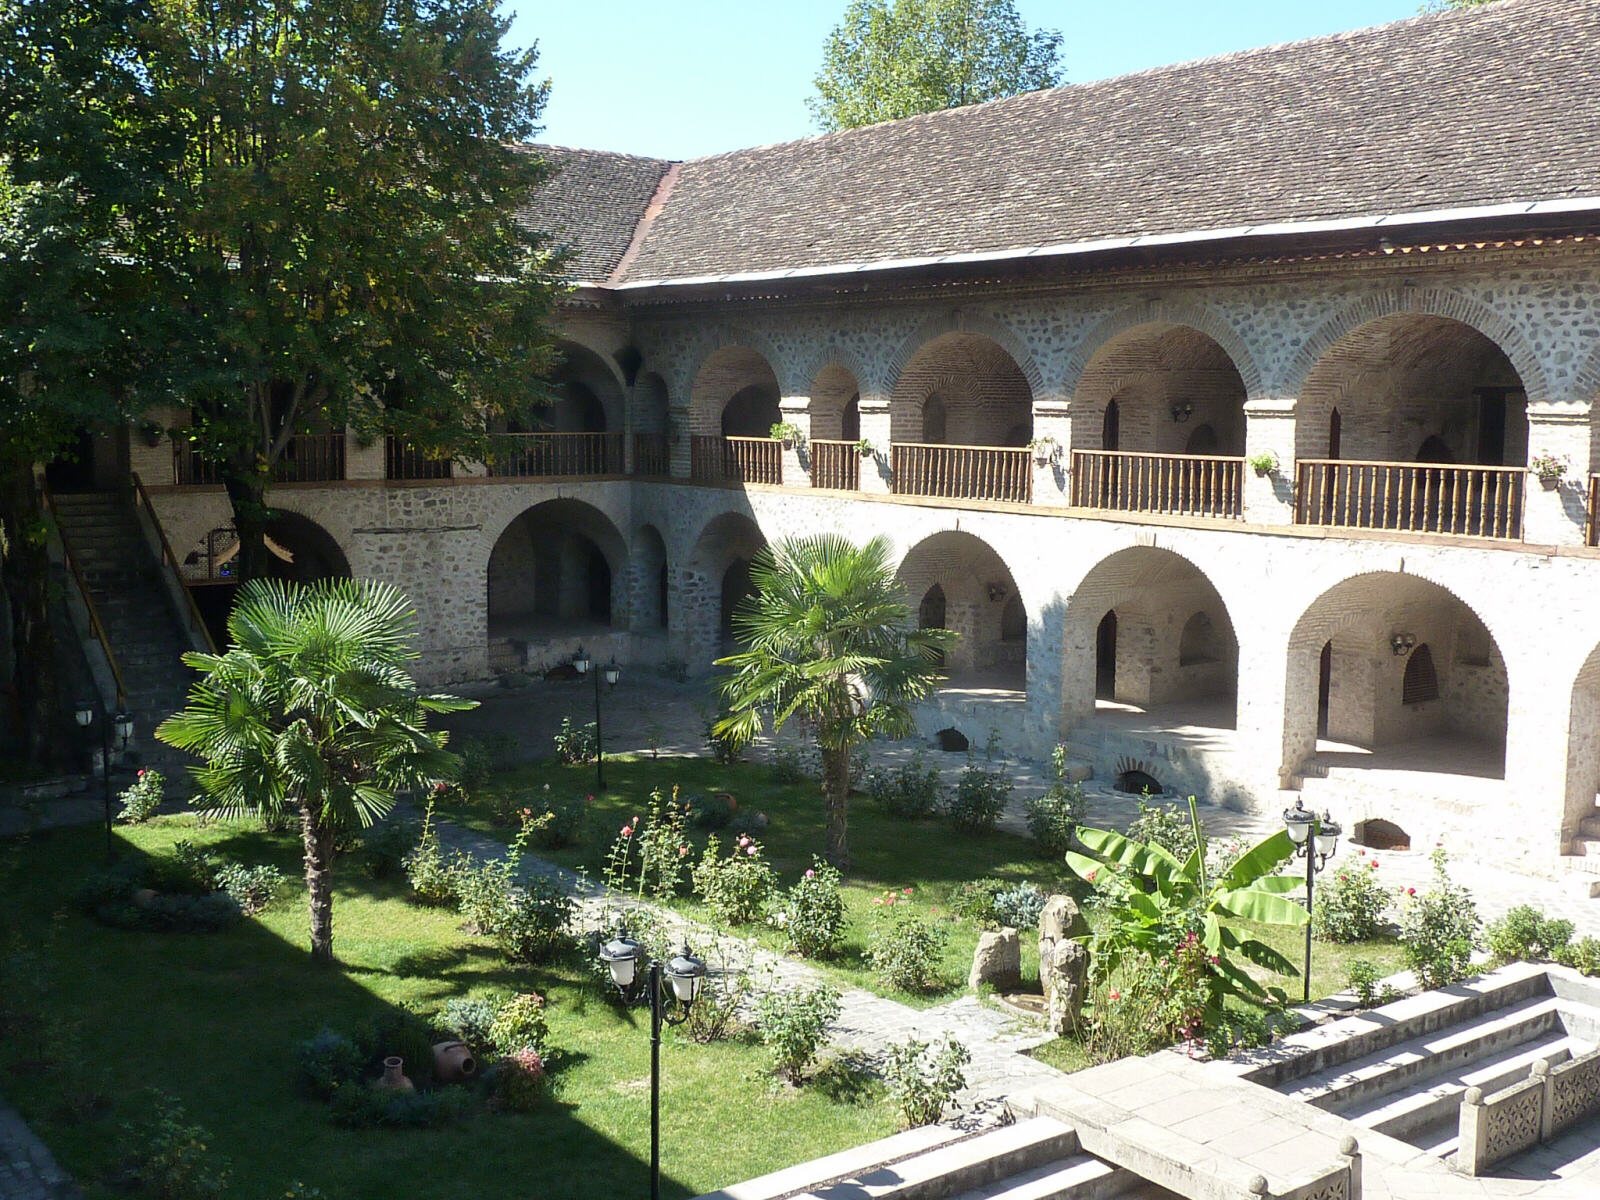 The courtyard of the Karavanseray hotel in Sheki, Azerbaijan